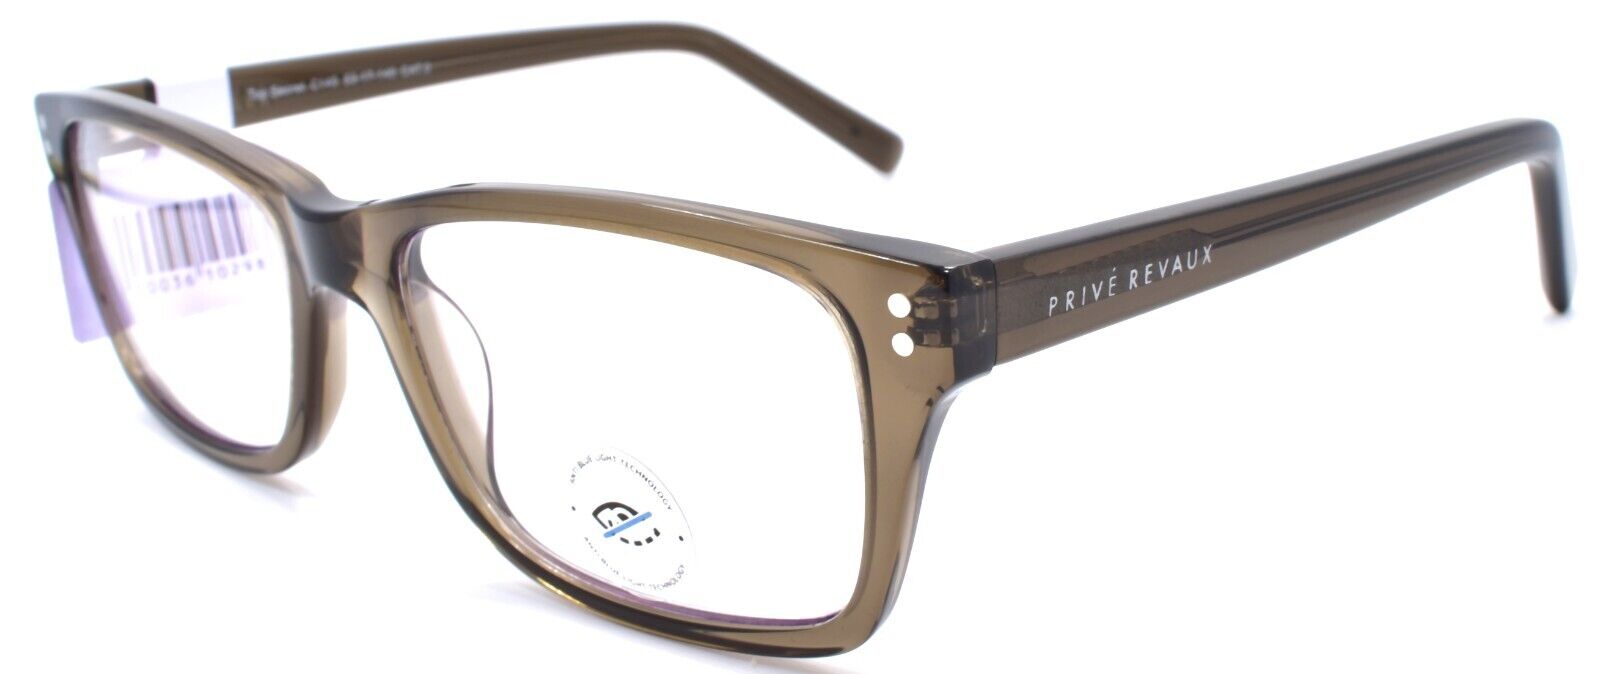 1-Prive Revaux Top Secret C140 Eyeglasses Blue Light Blocking RX-ready Grey-810036102988-IKSpecs